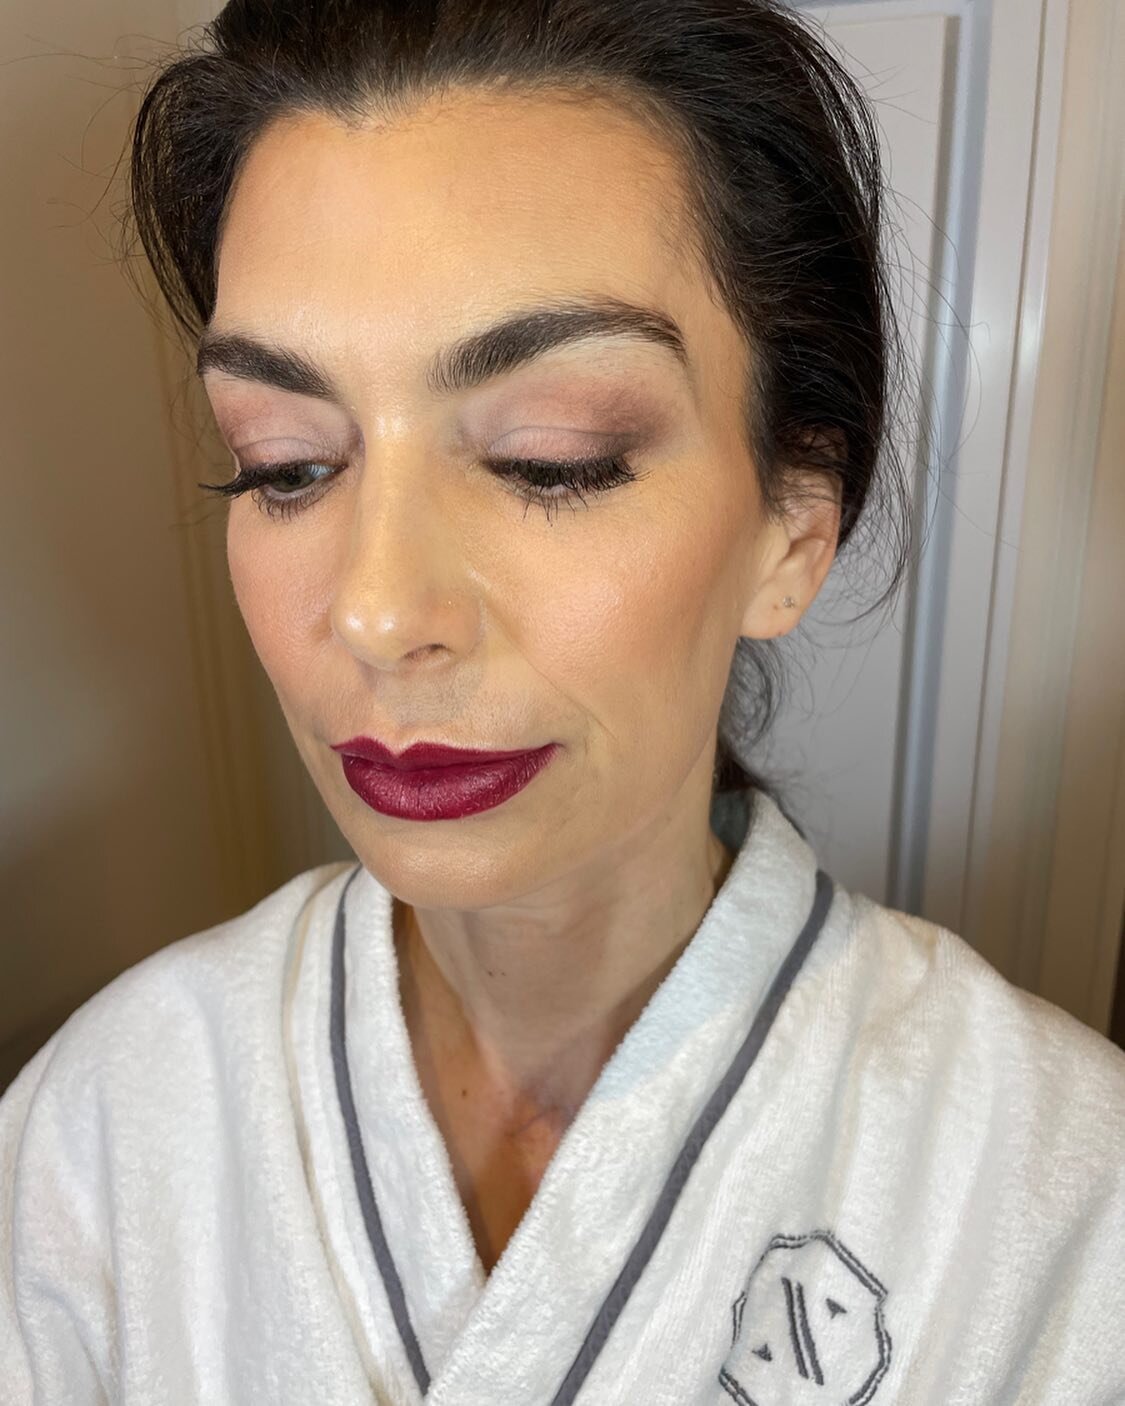 Lashes &amp; Lips💋 

Makeup @s.r.pullingmua 
Representing @lyndsaysimonbeauty 

On The Lips💄
@maccosmetics Plum lipliner and Diva Lipstick 
-
-
-
-
-
#boldlips #datenight #makeup #makeupartist #makeuptrends #motd #boston #bostonmakeupartist